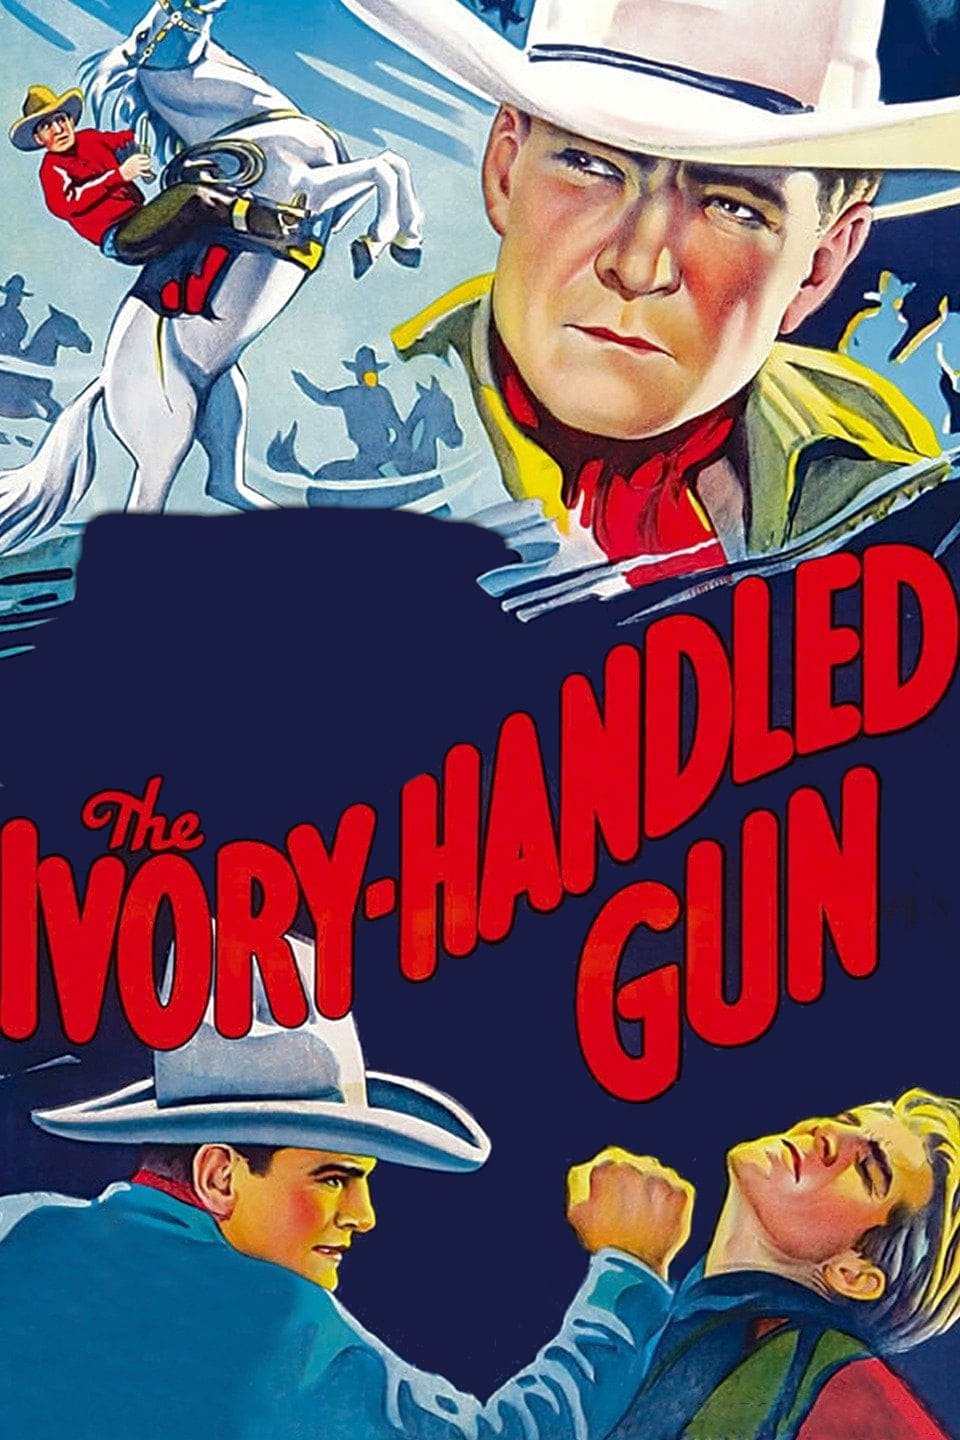 The Ivory-Handled Gun